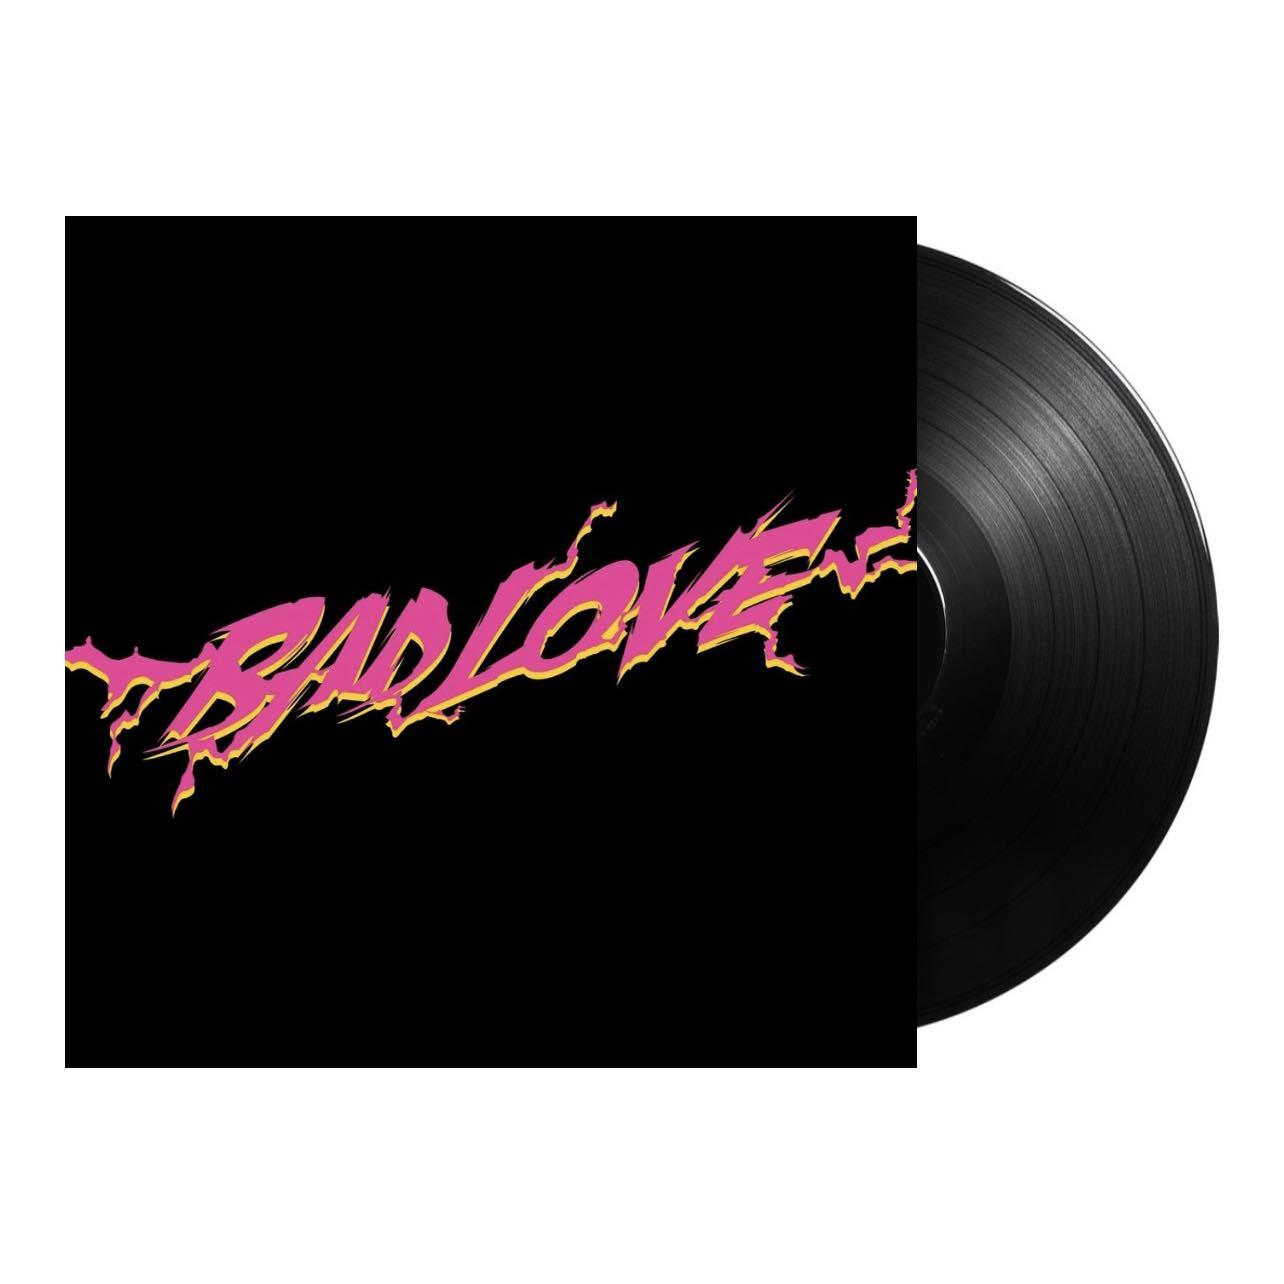 Key Bad Love Lp Vinyl Record Shinee Hobbies Toys Music Media Vinyls On Carousell